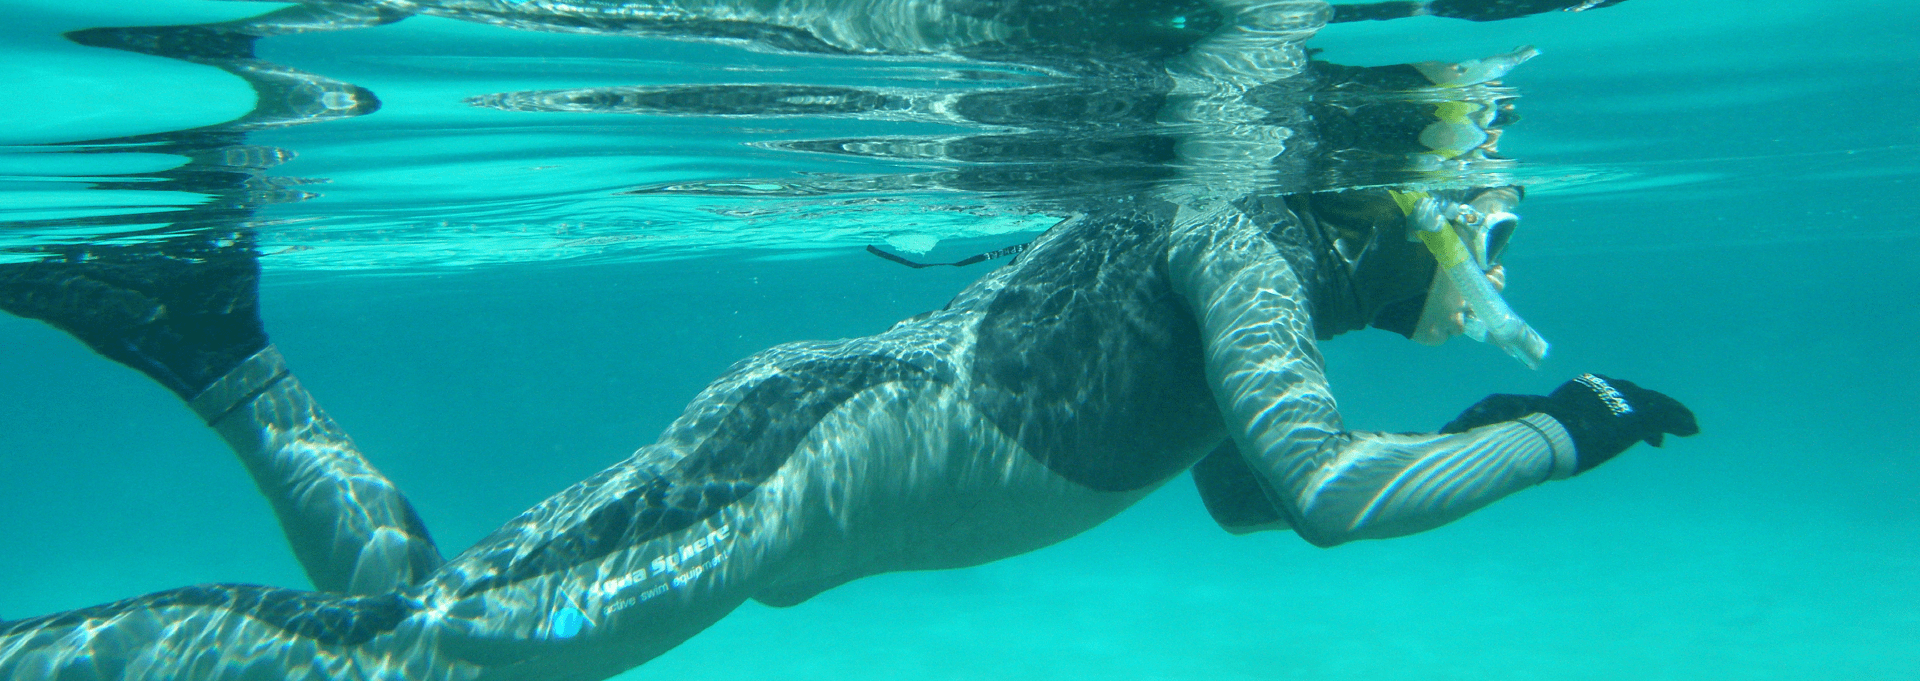 snorkeling in cristal clear waters